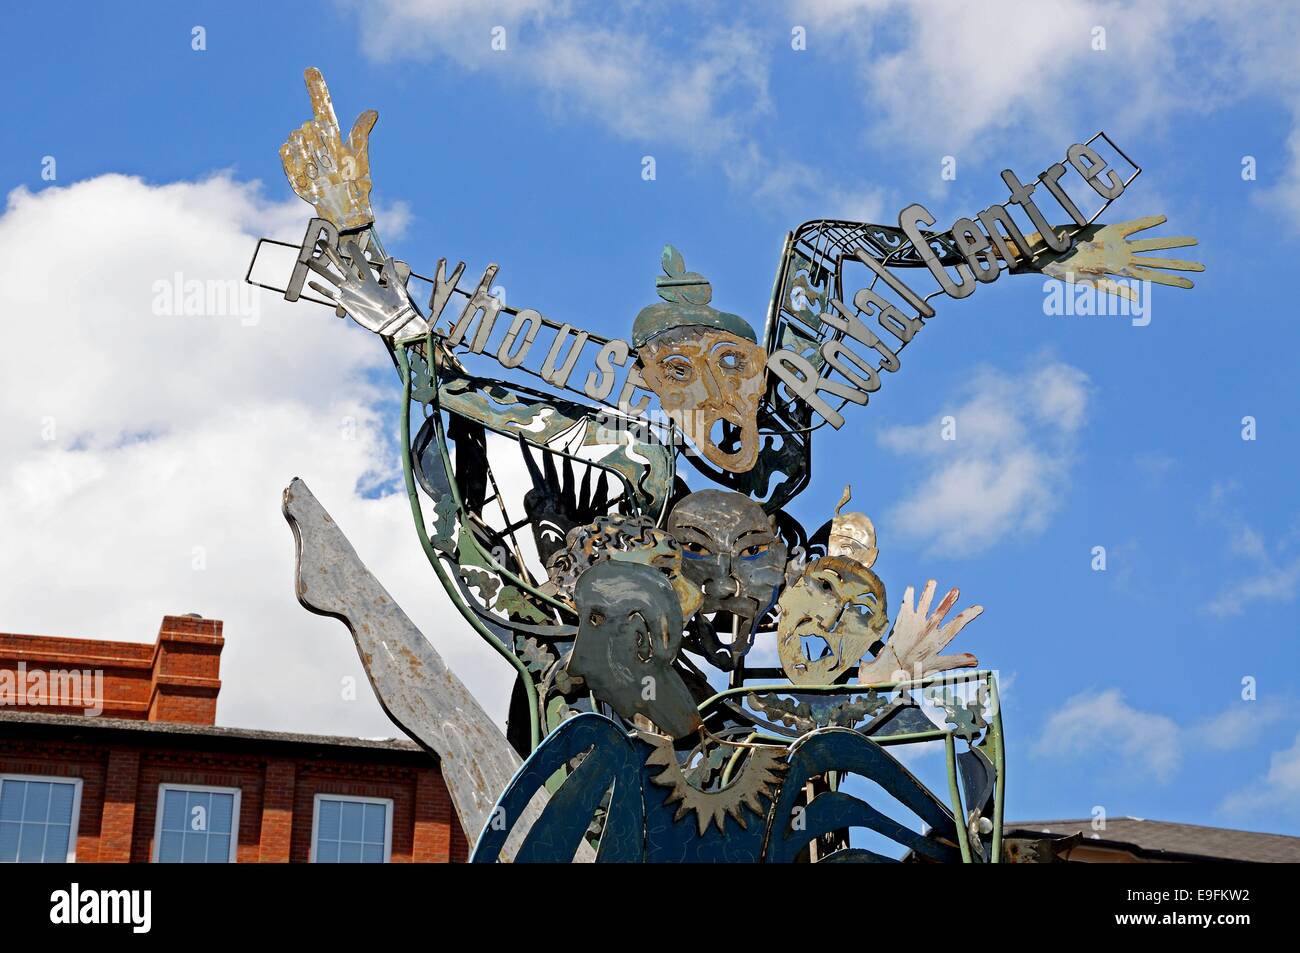 Metal sculpture advertising Playhouse Theatre, Nottingham, Nottinghamshire, England, UK, Western Europe. Stock Photo